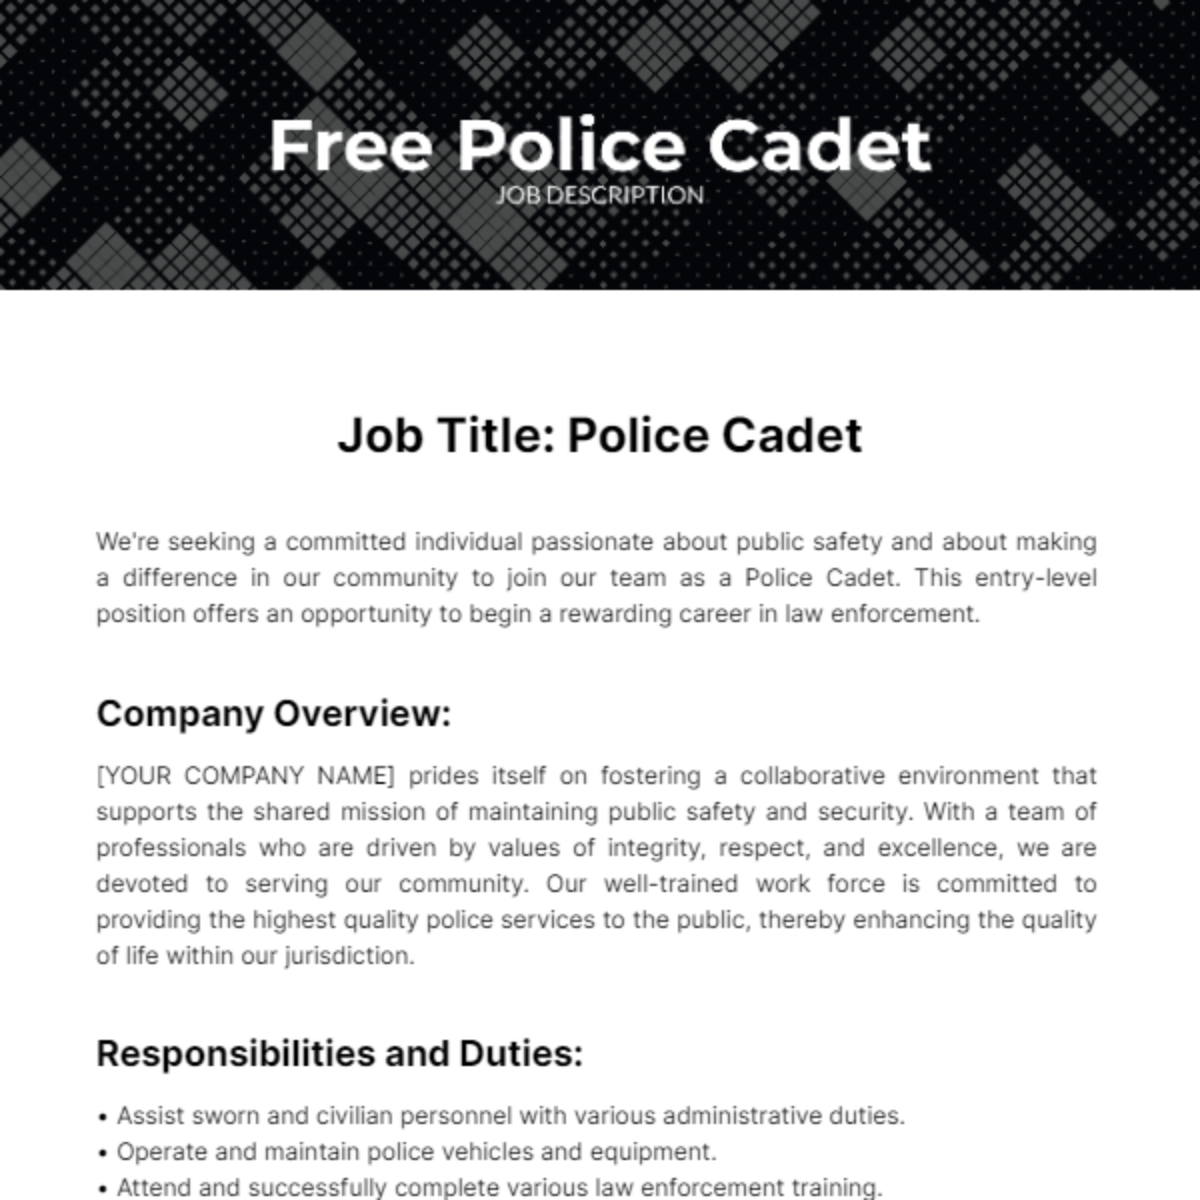 Free Police Cadet Job Description Template